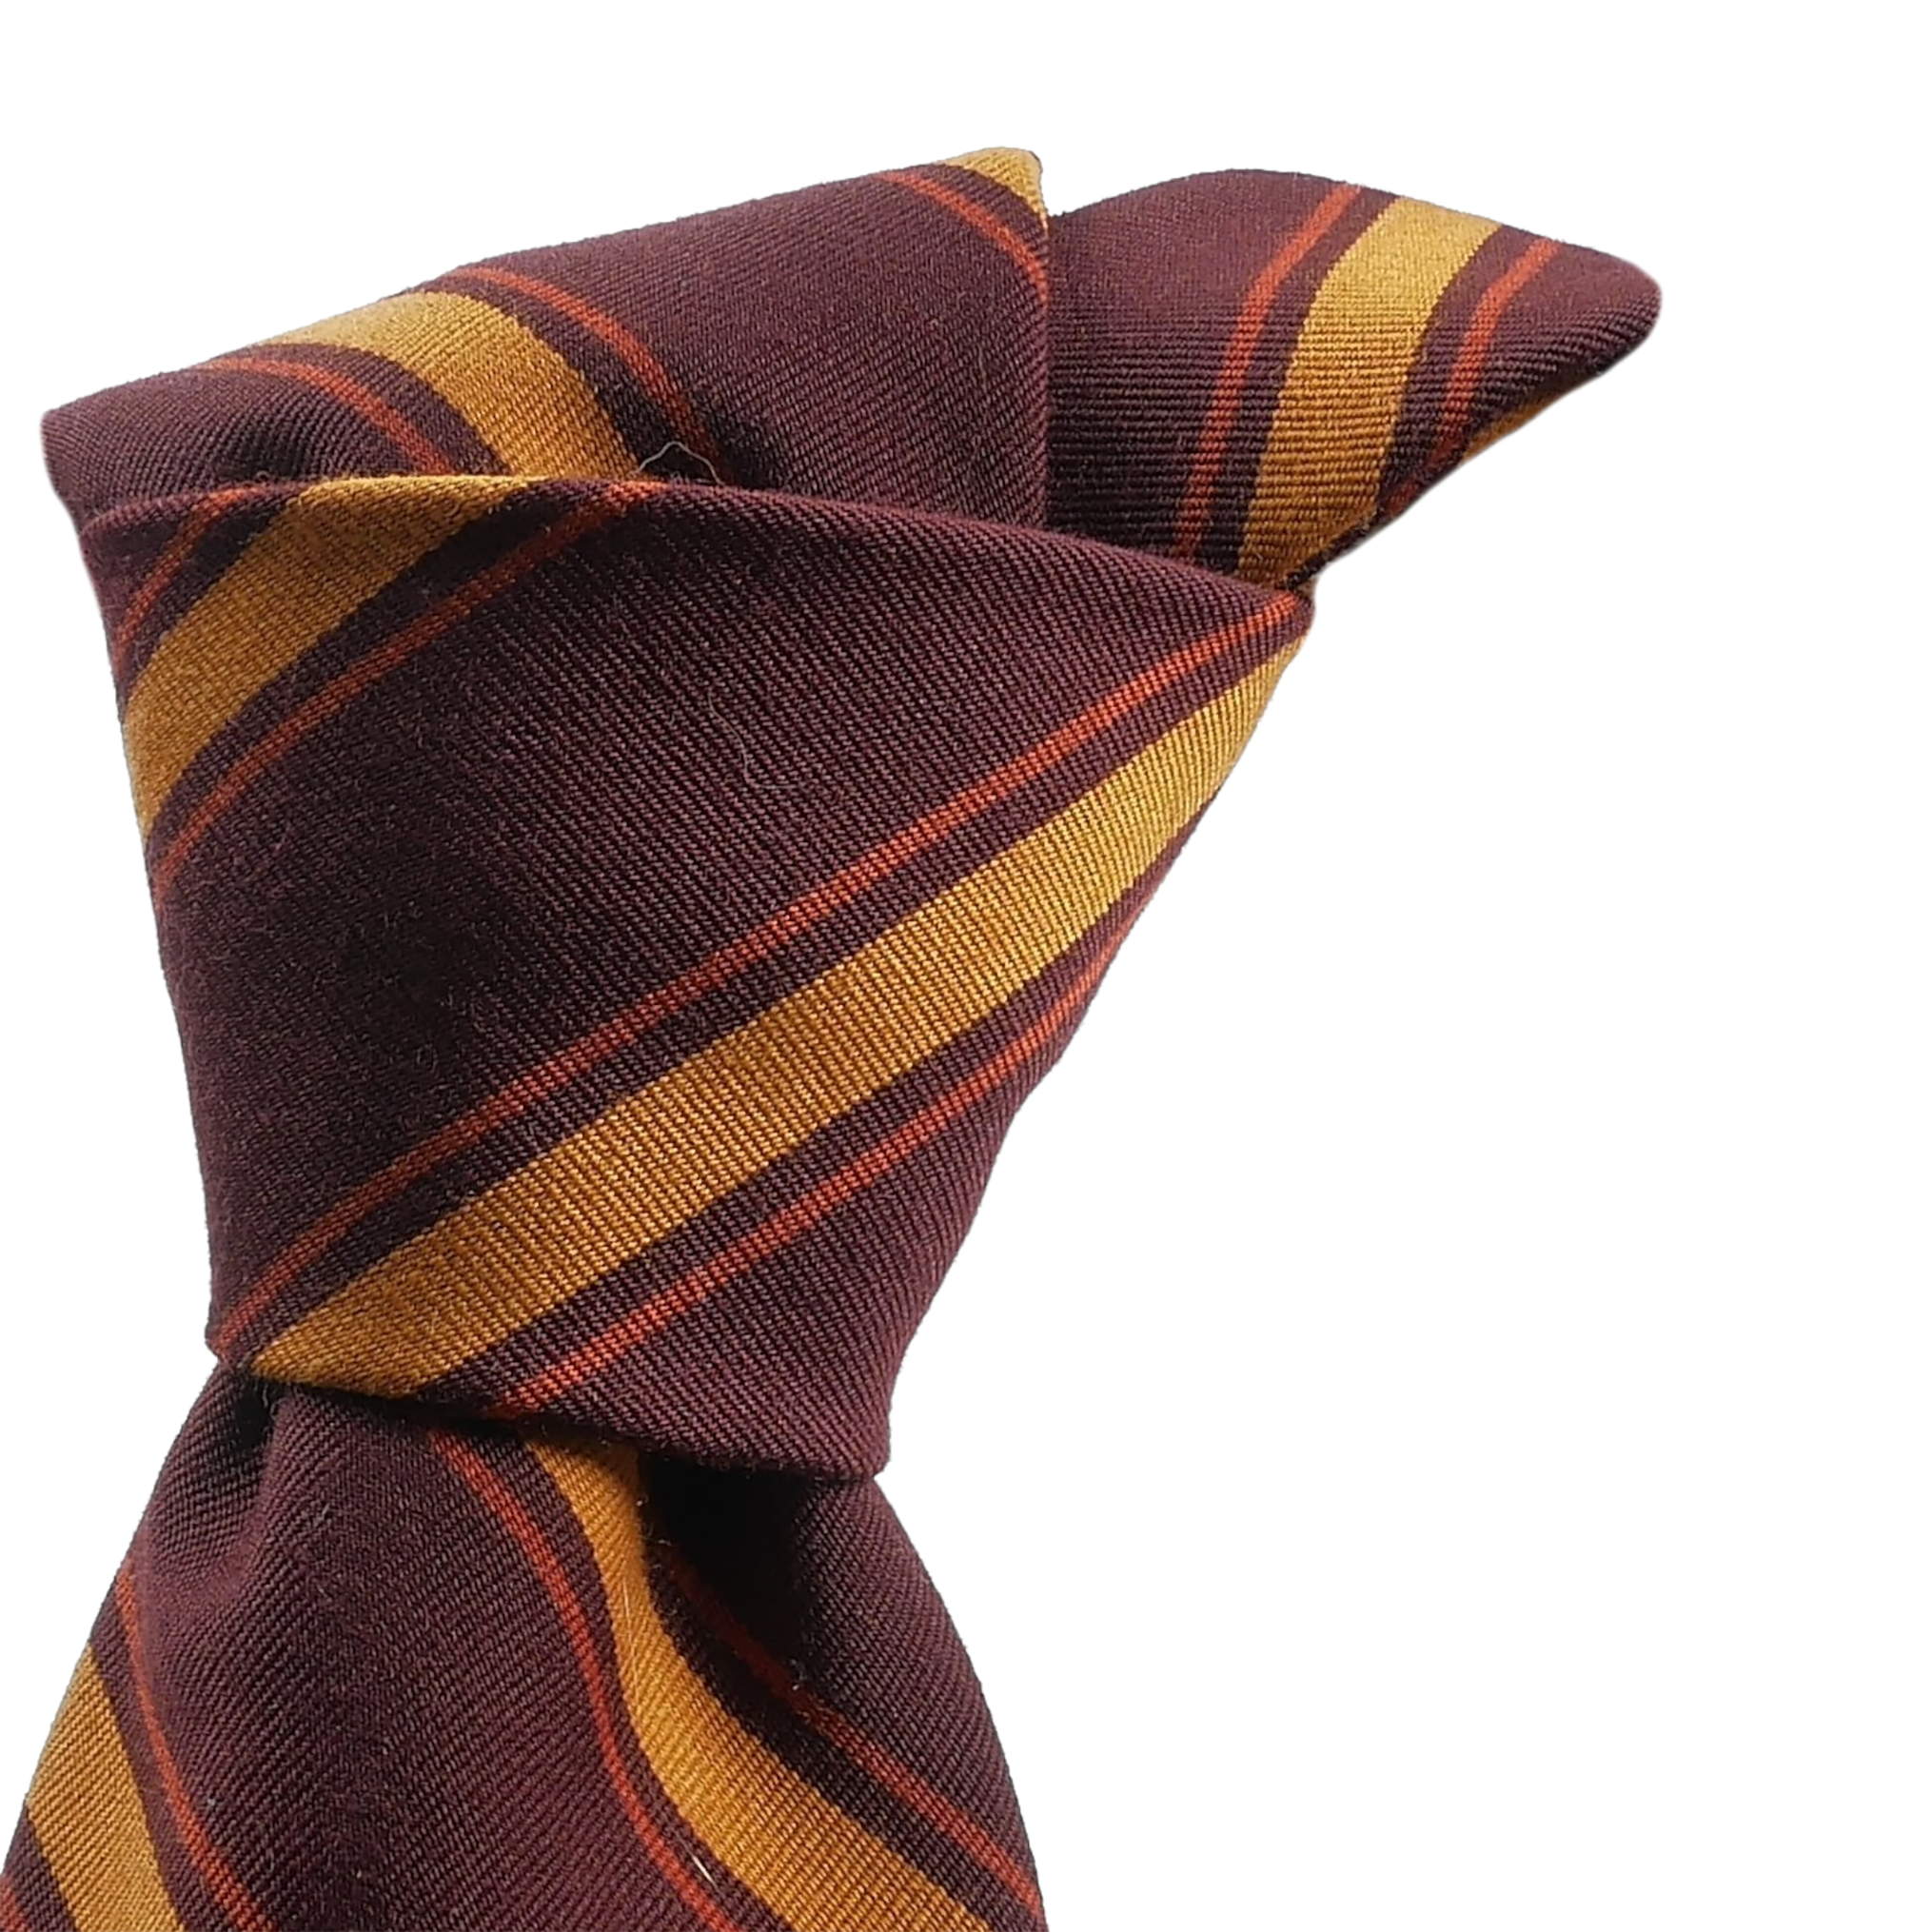 Anversa unlined Regimental bordeaux tie in wool and cotton